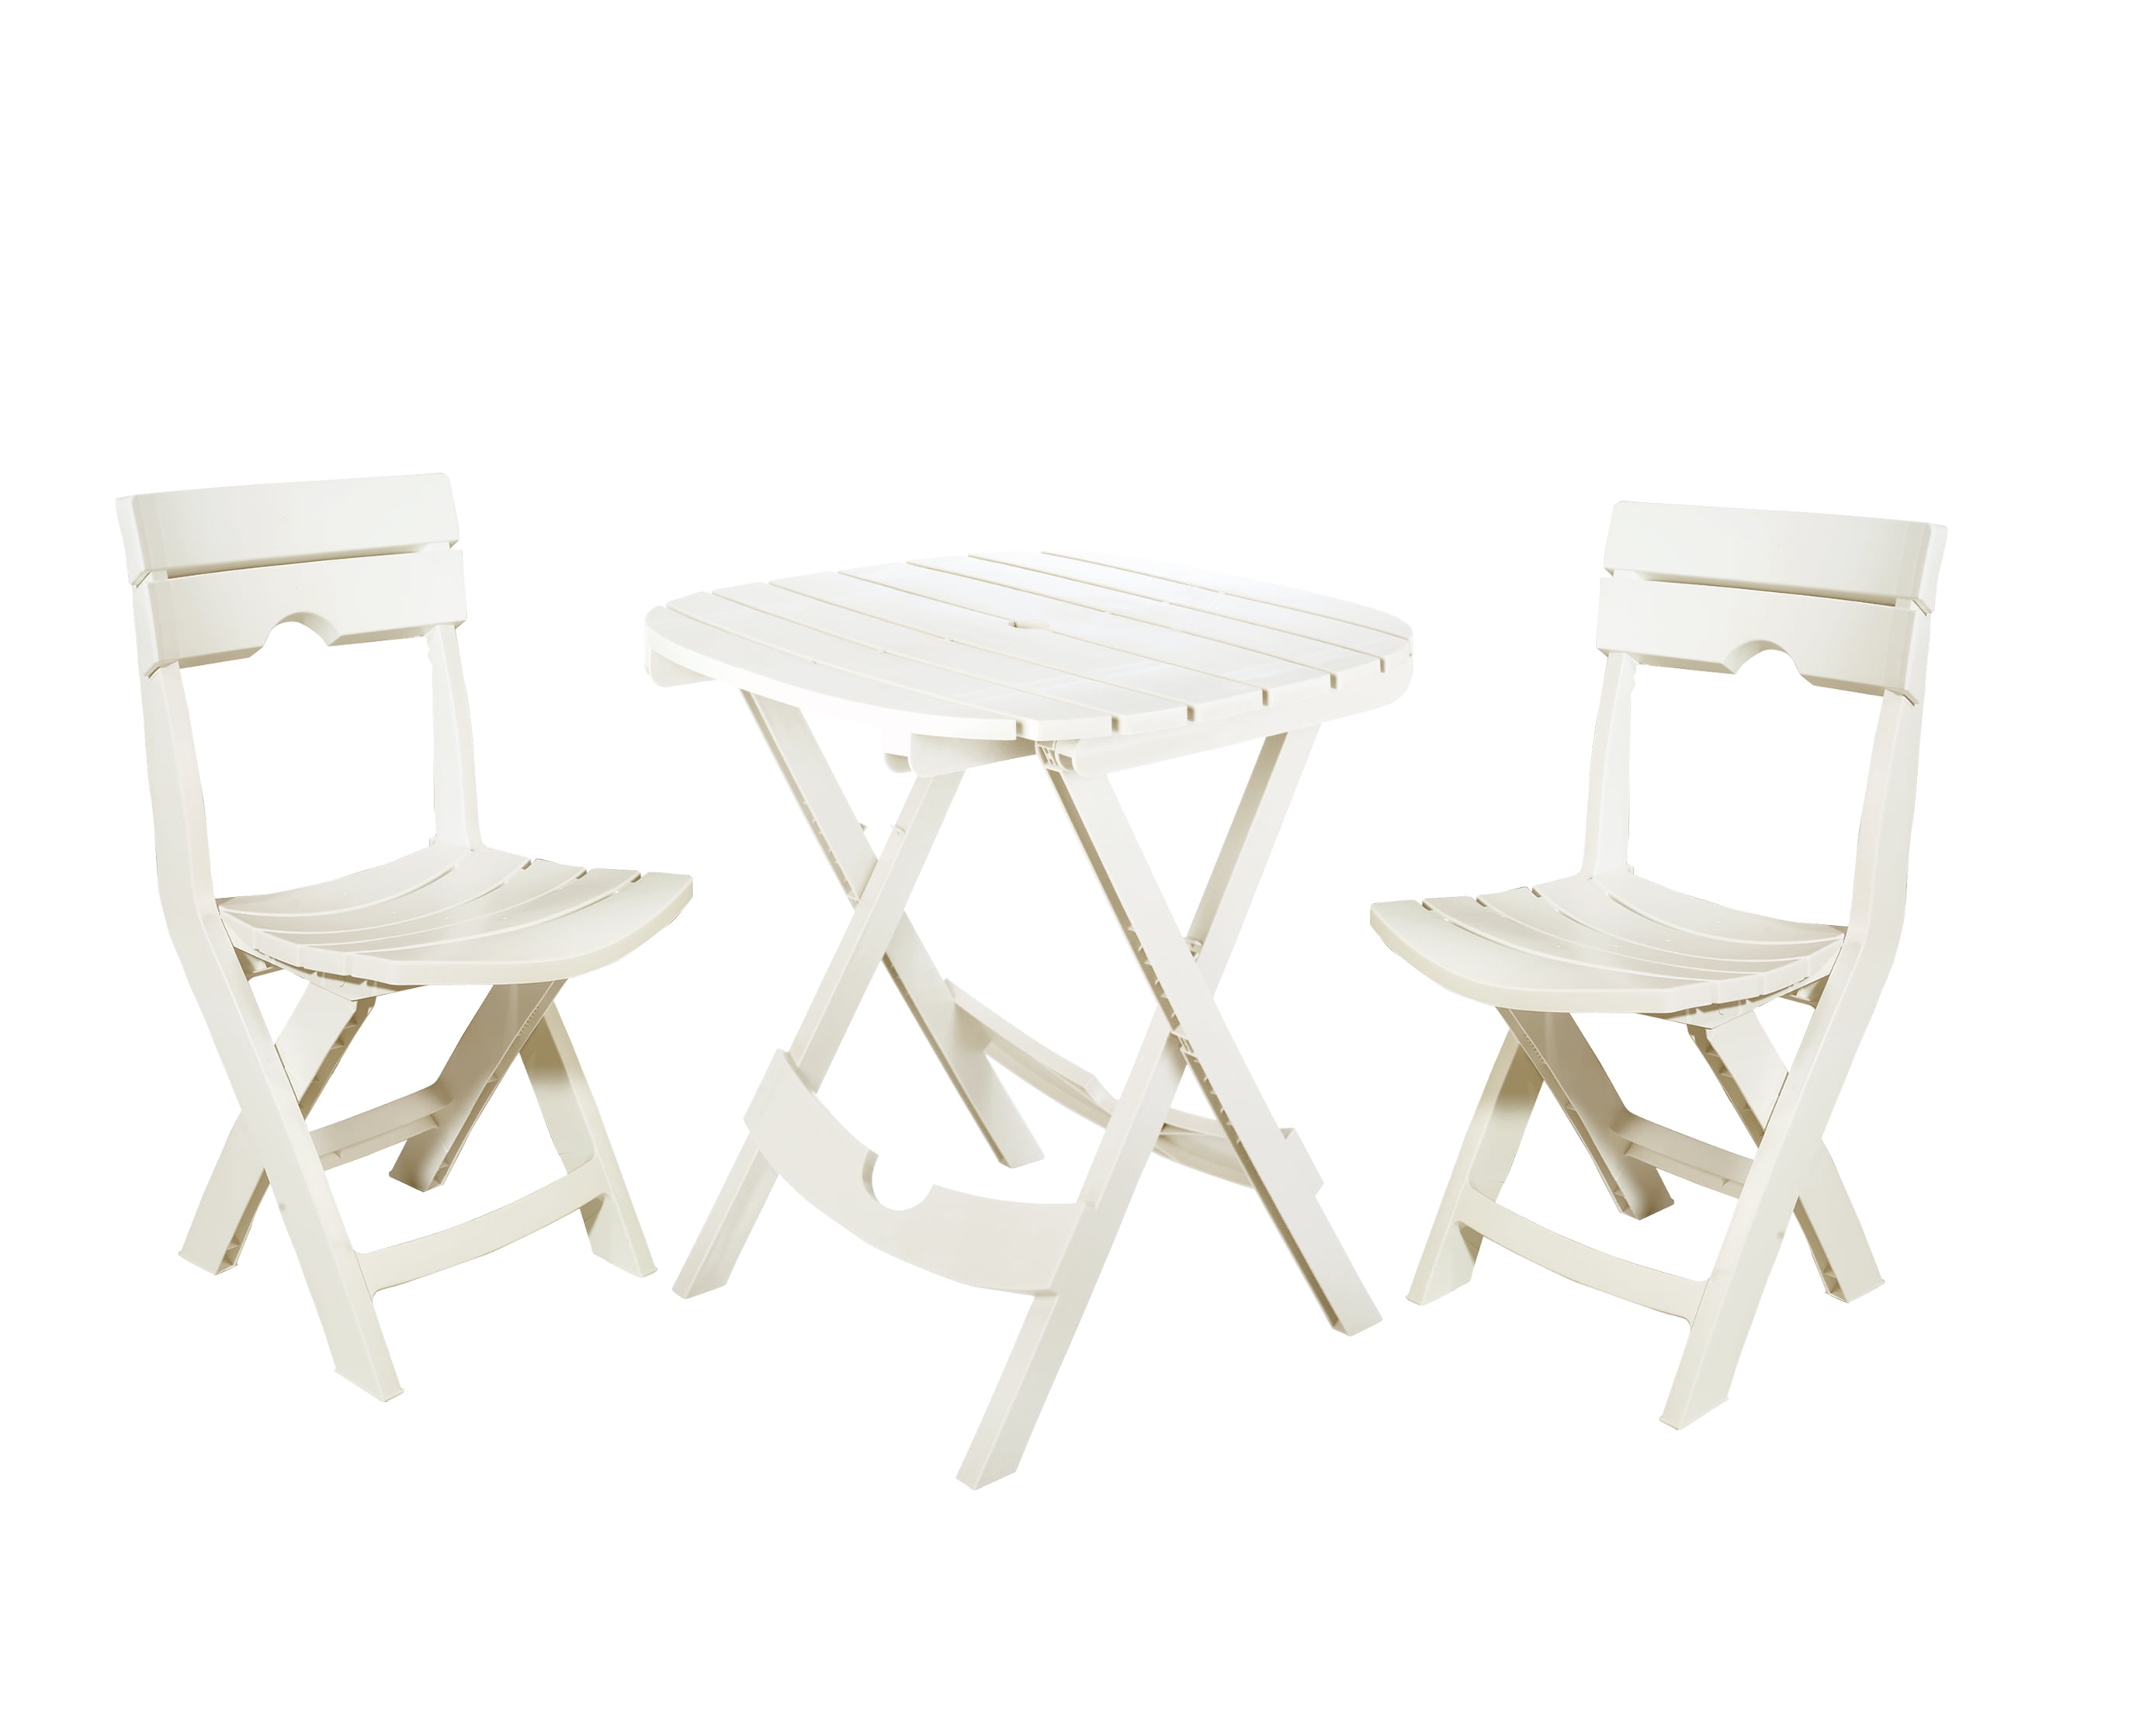 Adams Manufacturing Quik-Fold White Patio Chair 